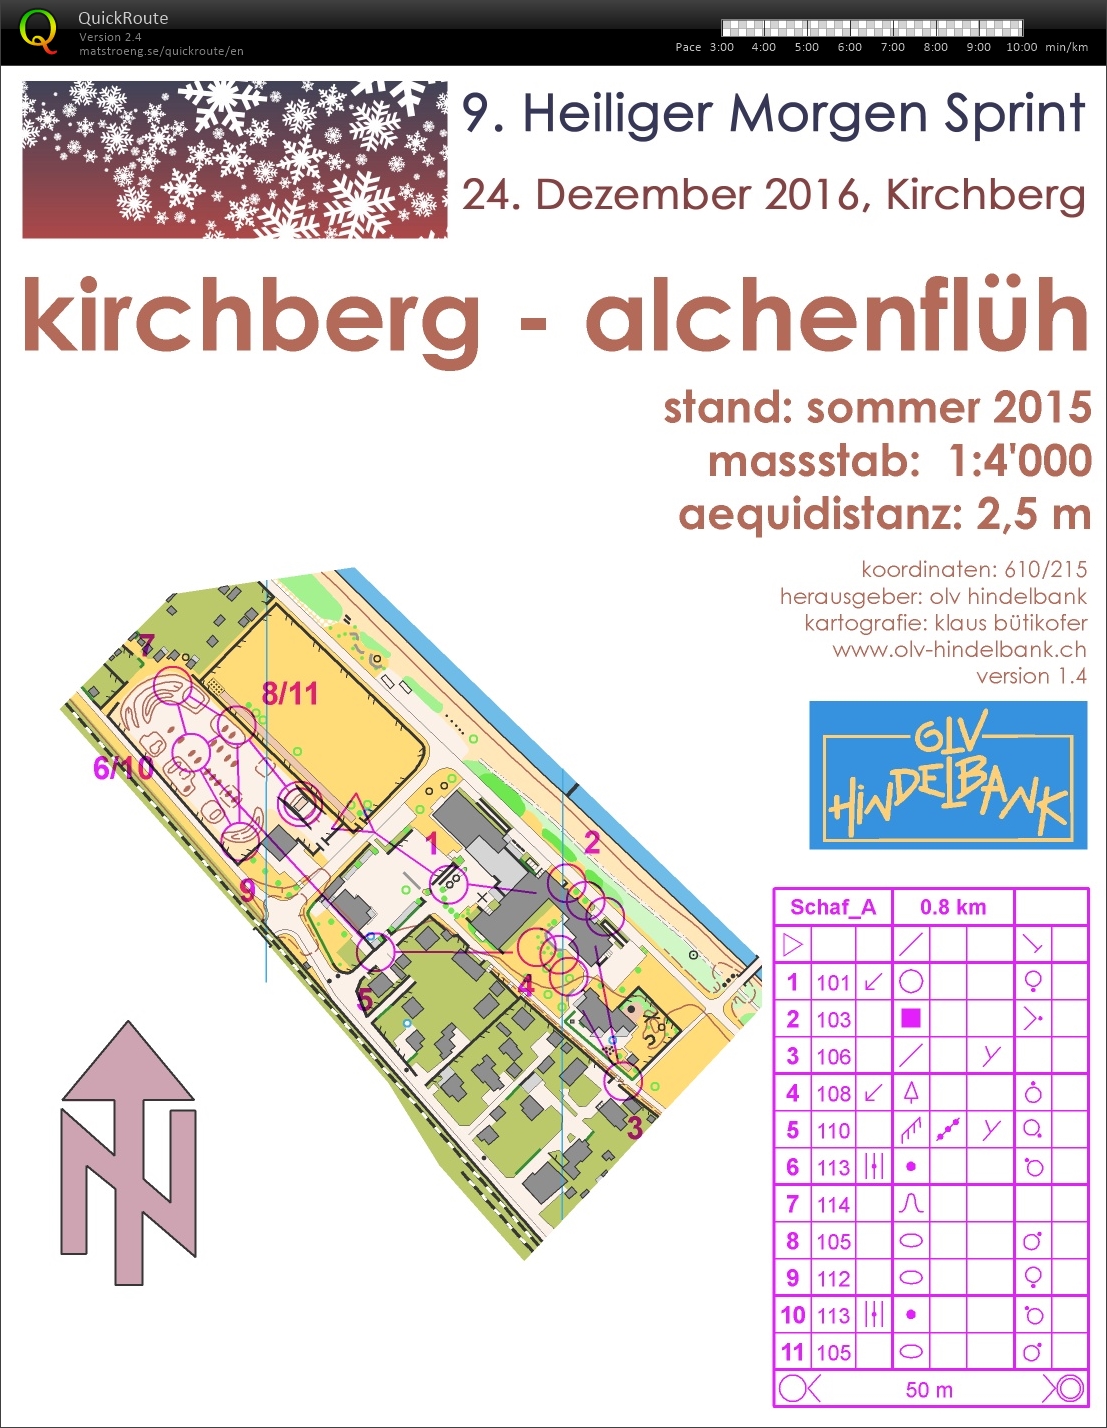 Heiligmorgesprint - Prolog (24-12-2016)